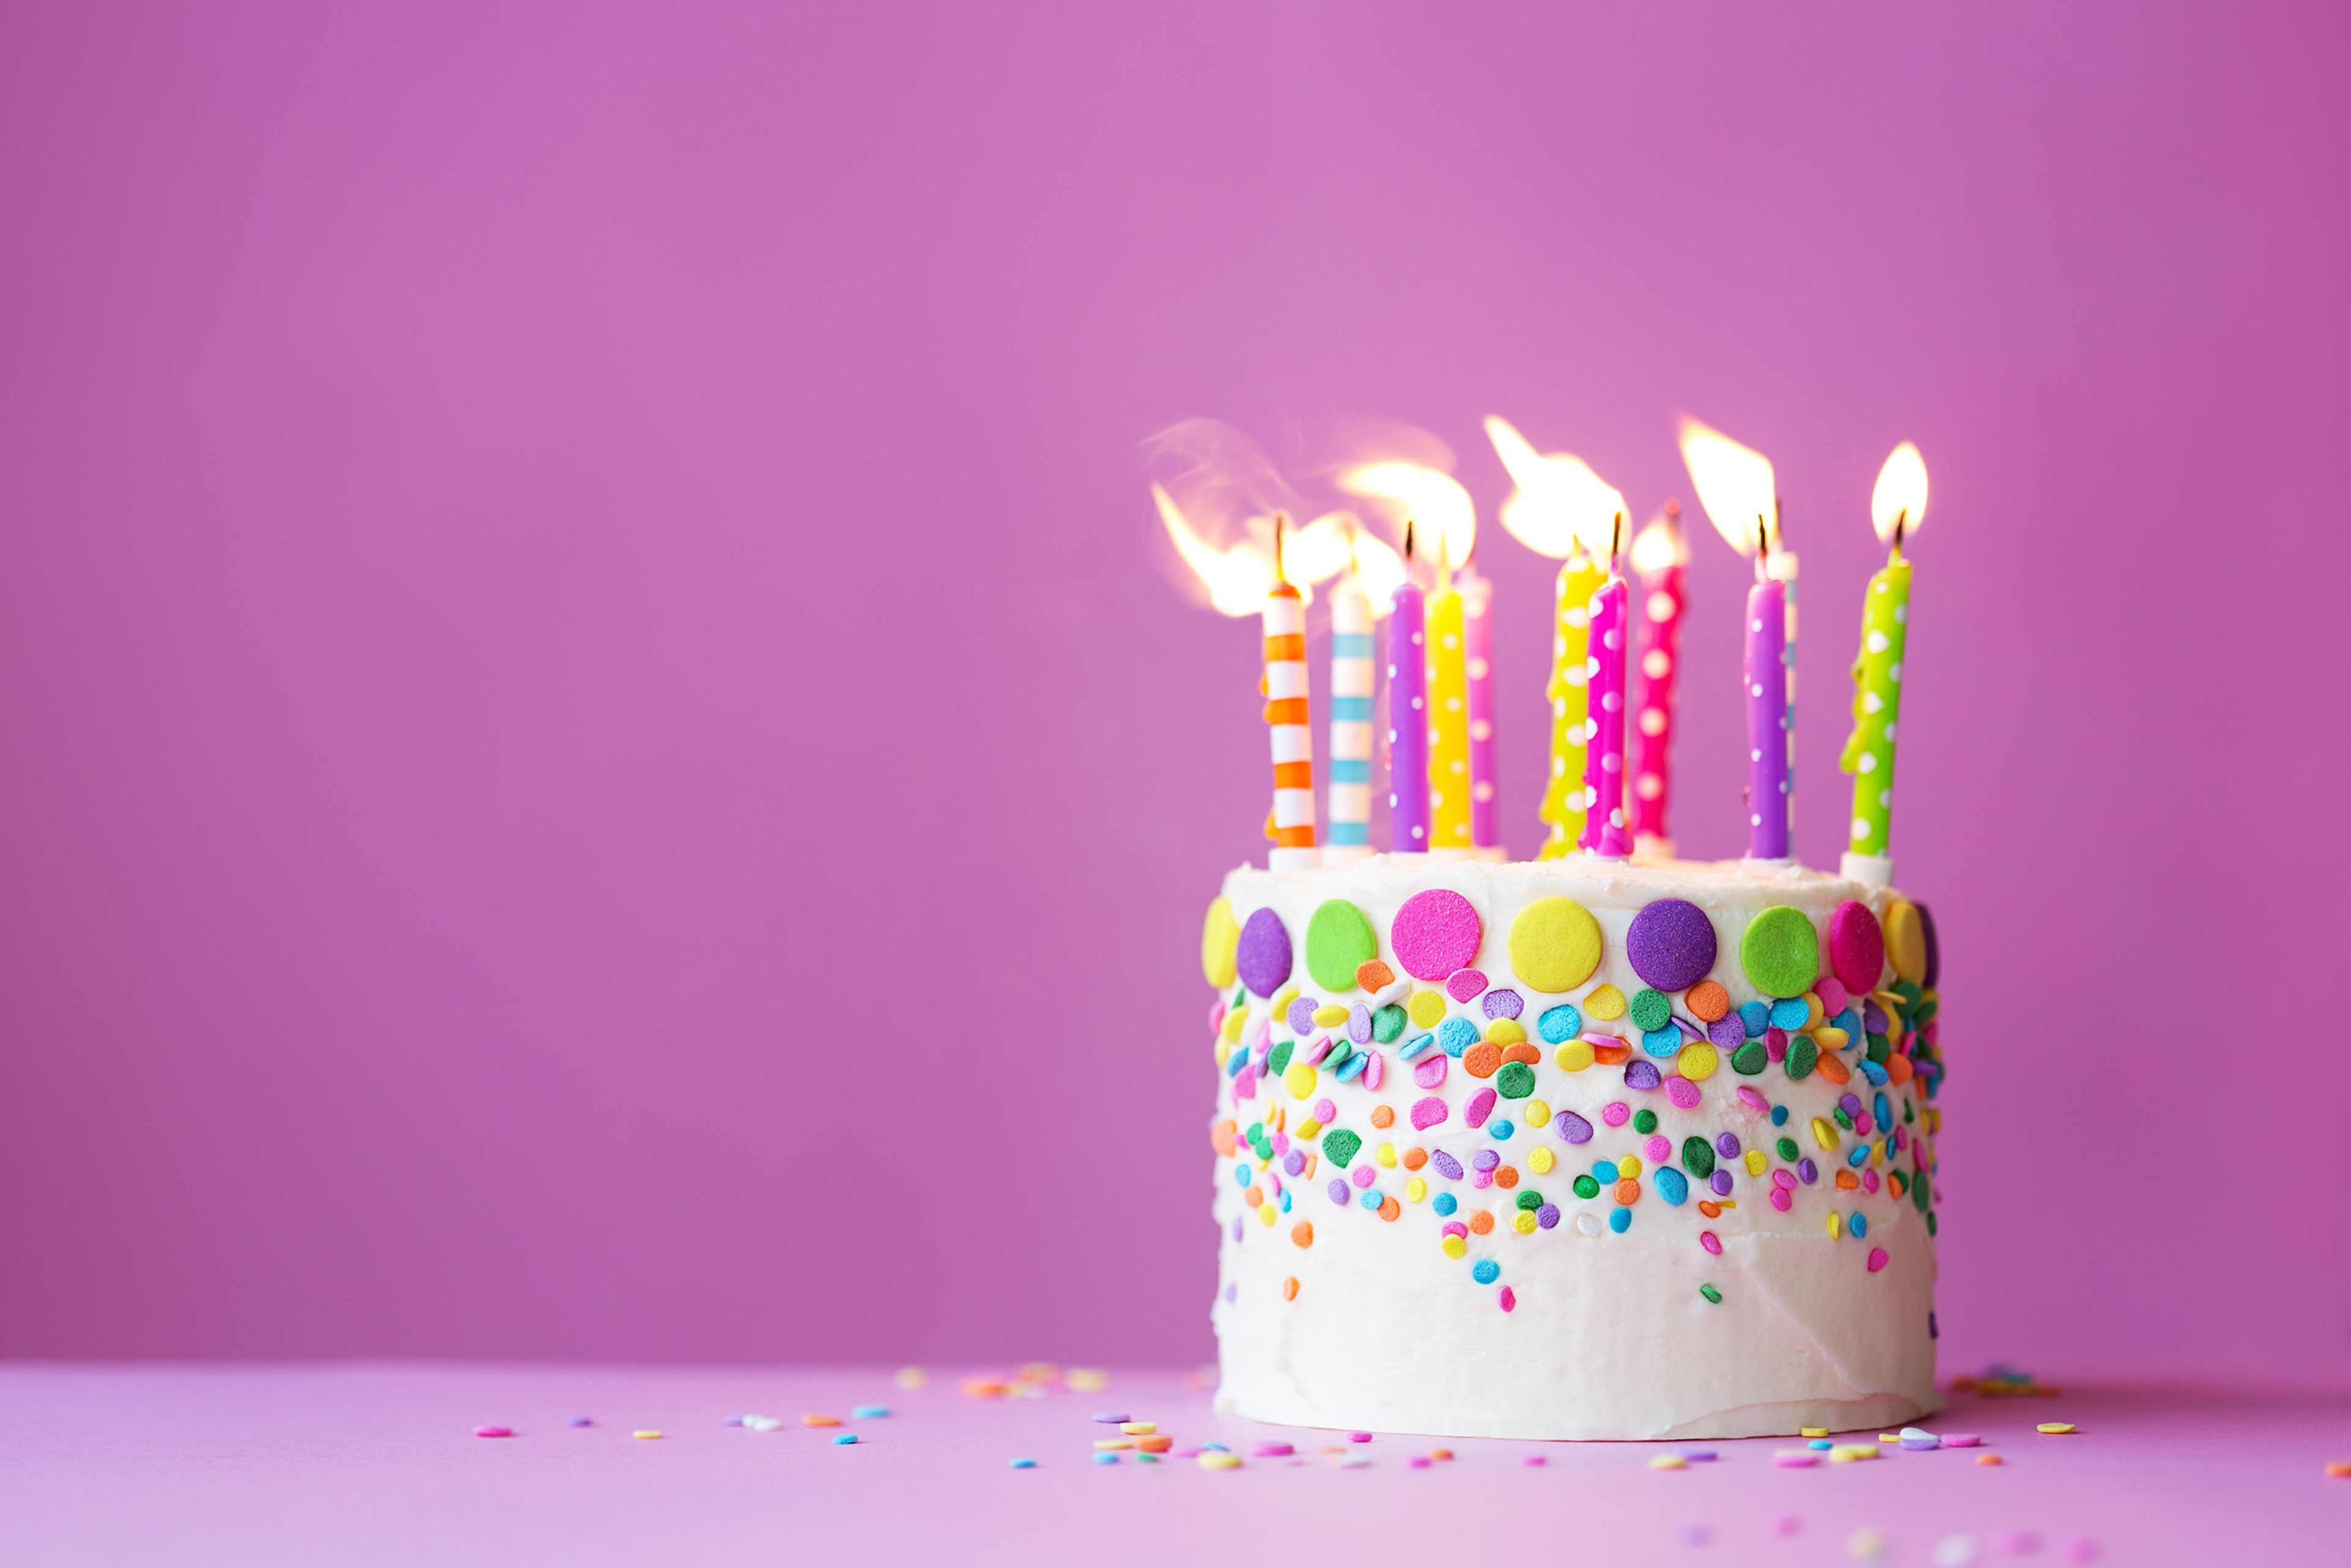 birthday 4k HD quality desktop wallpaper. Happy birthday cake image, Birthday cake with candles, Happy birthday cakes